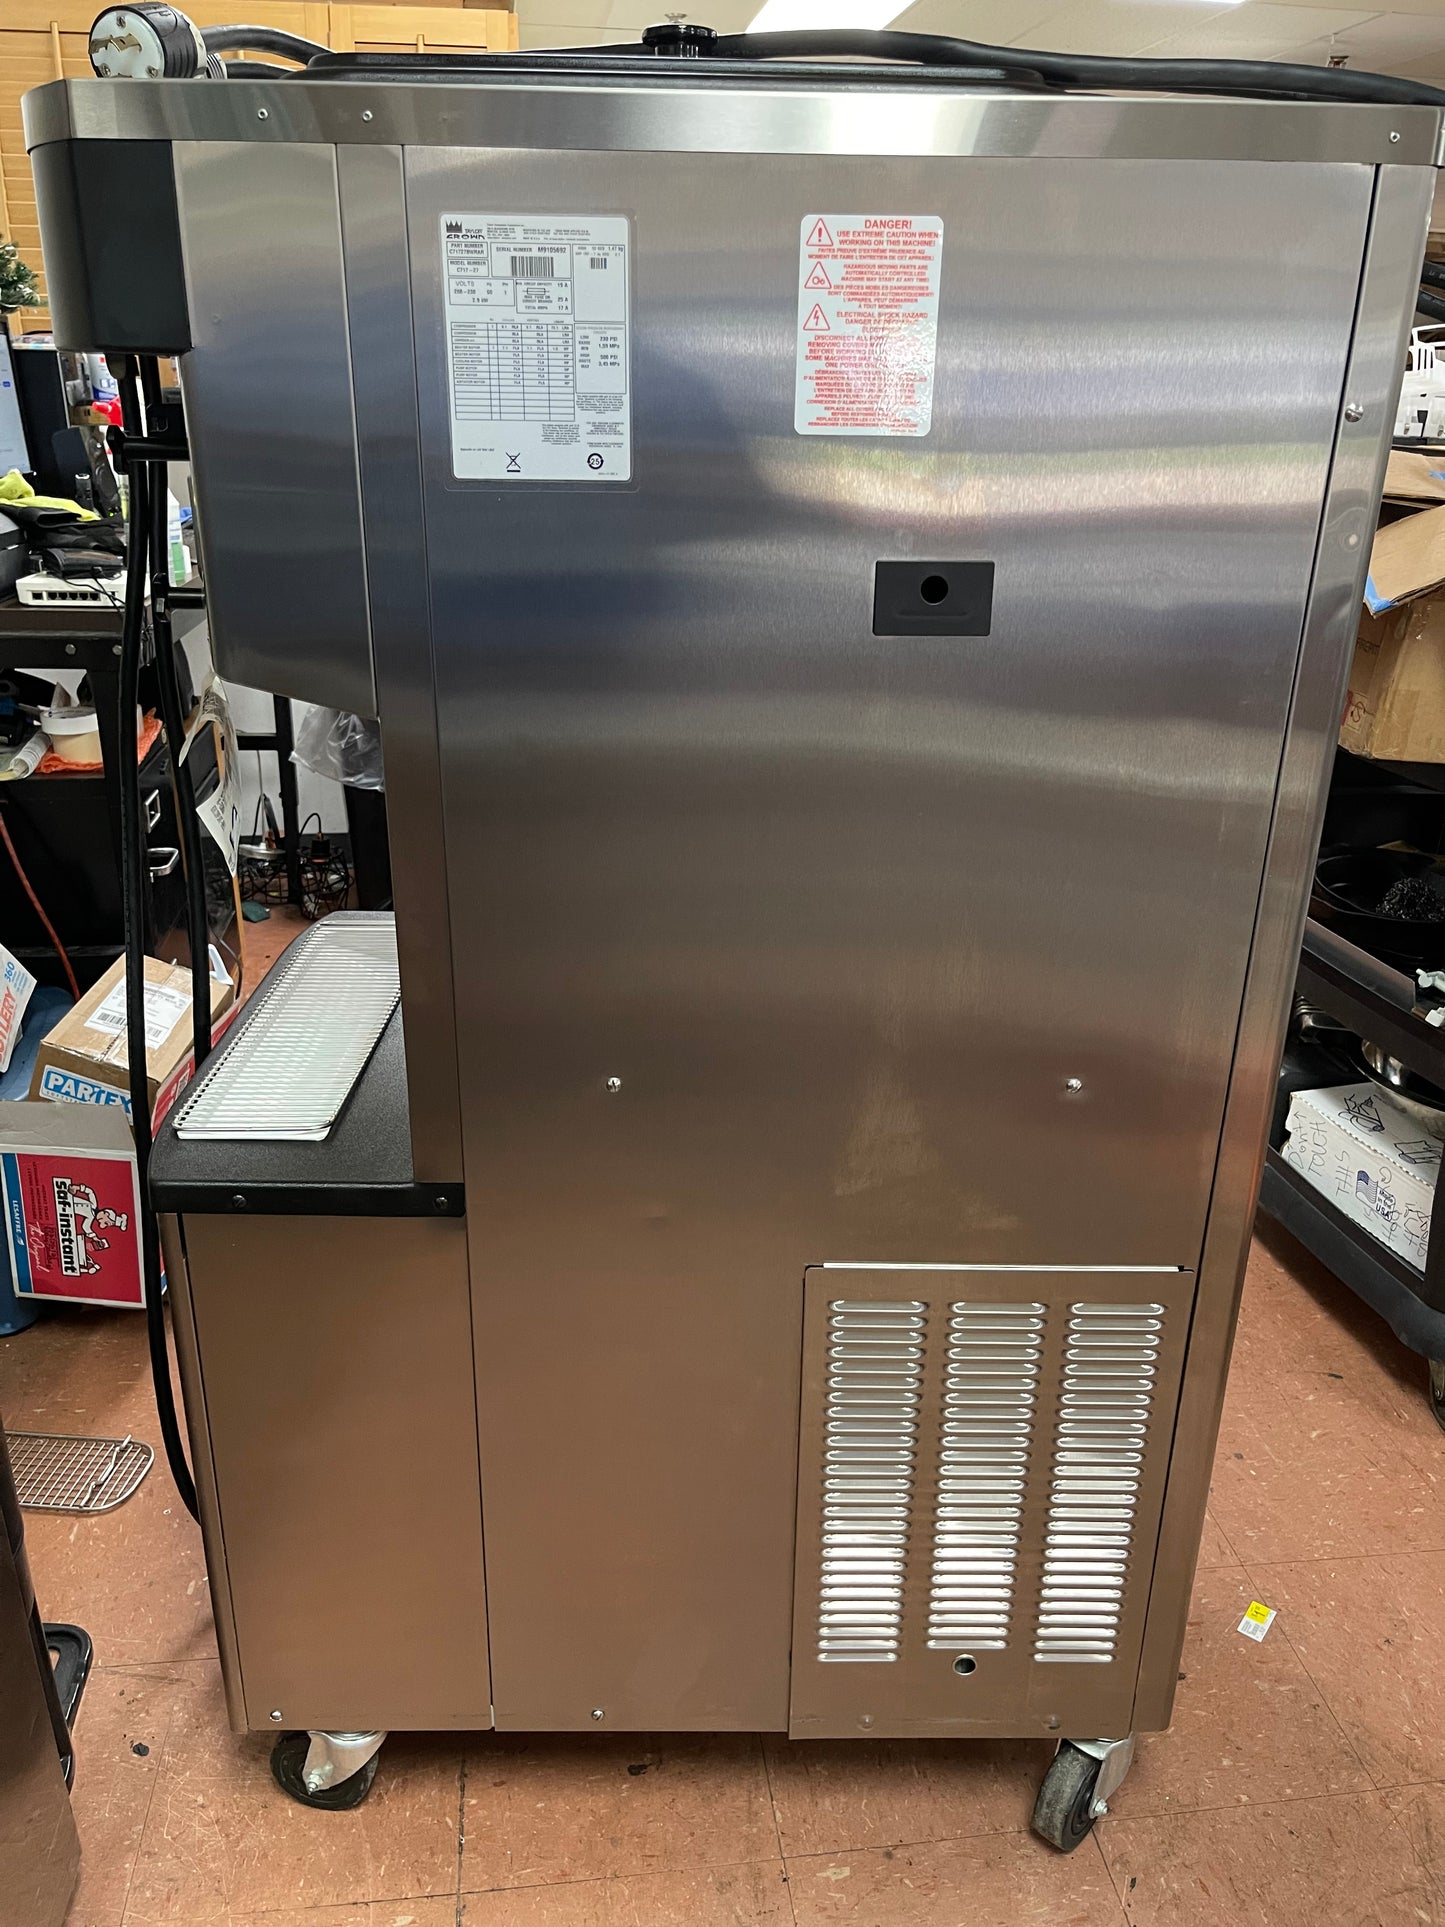 NEW 2019 Taylor C717-27 Soft Serve Freezer Twist Air Cooled Ice Cream Machine M9105692 - 1 Phase - JS